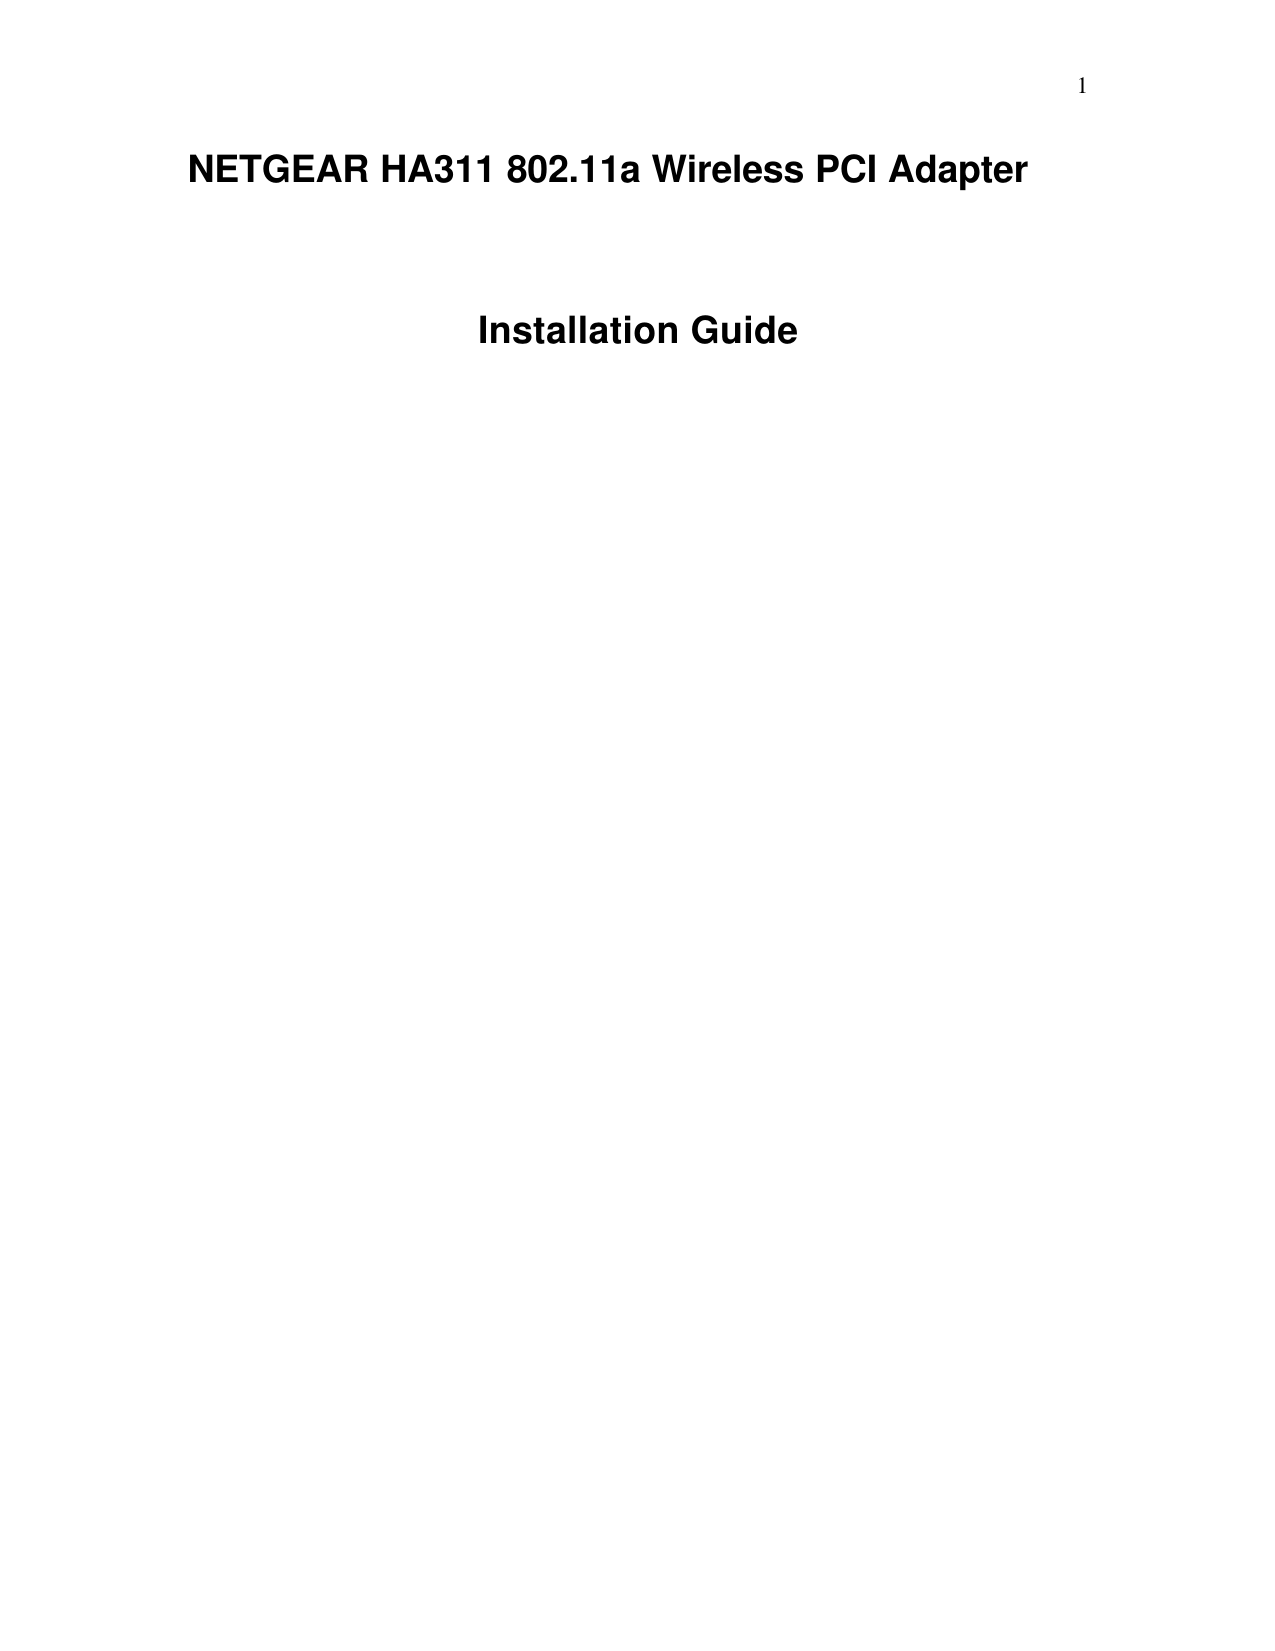  1NETGEAR HA311 802.11a Wireless PCI Adapter  Installation Guide                                     